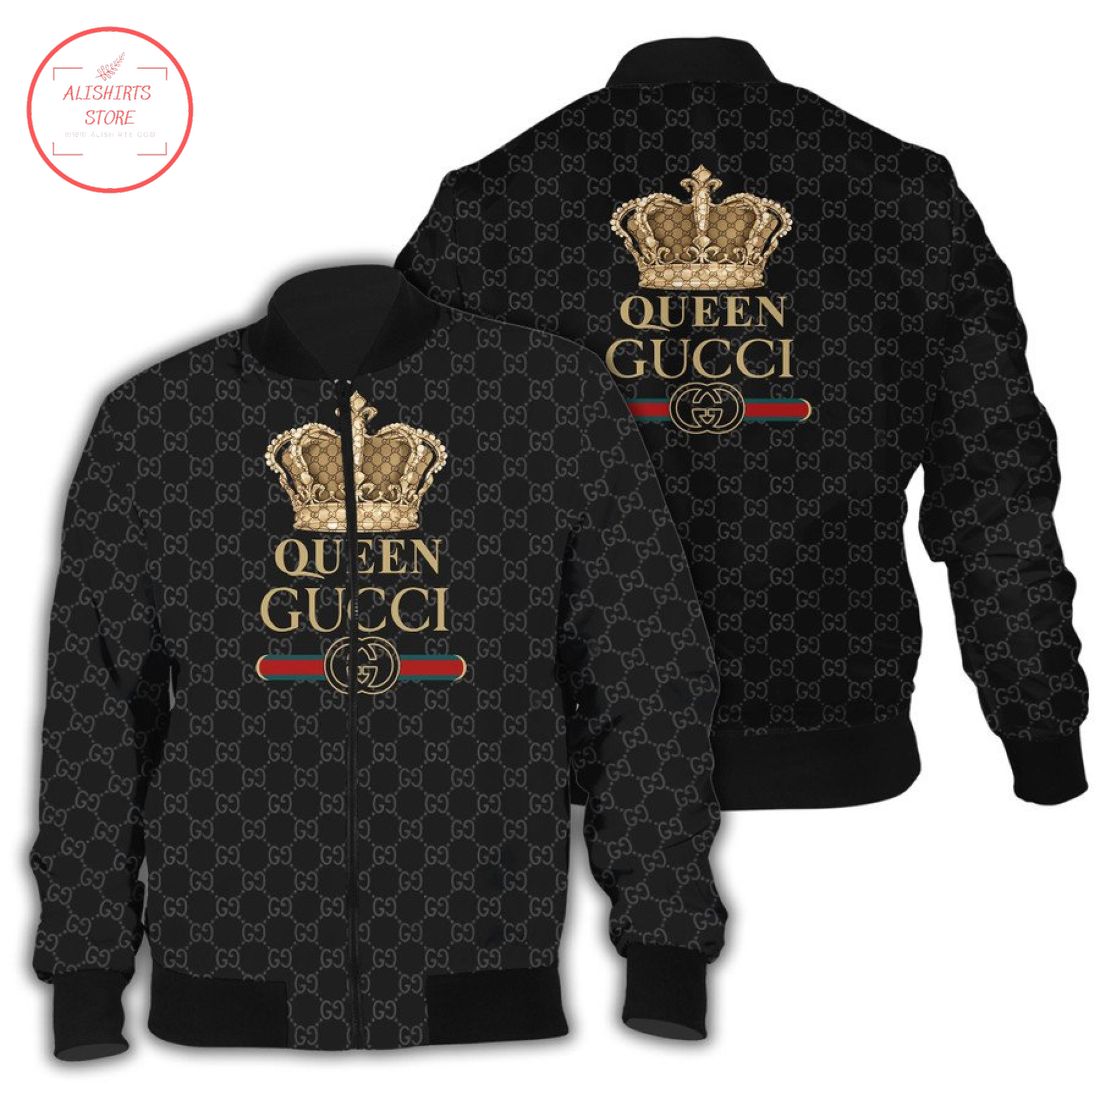 Gucci Queen Luxury Brand Pattern Bomber Jacket